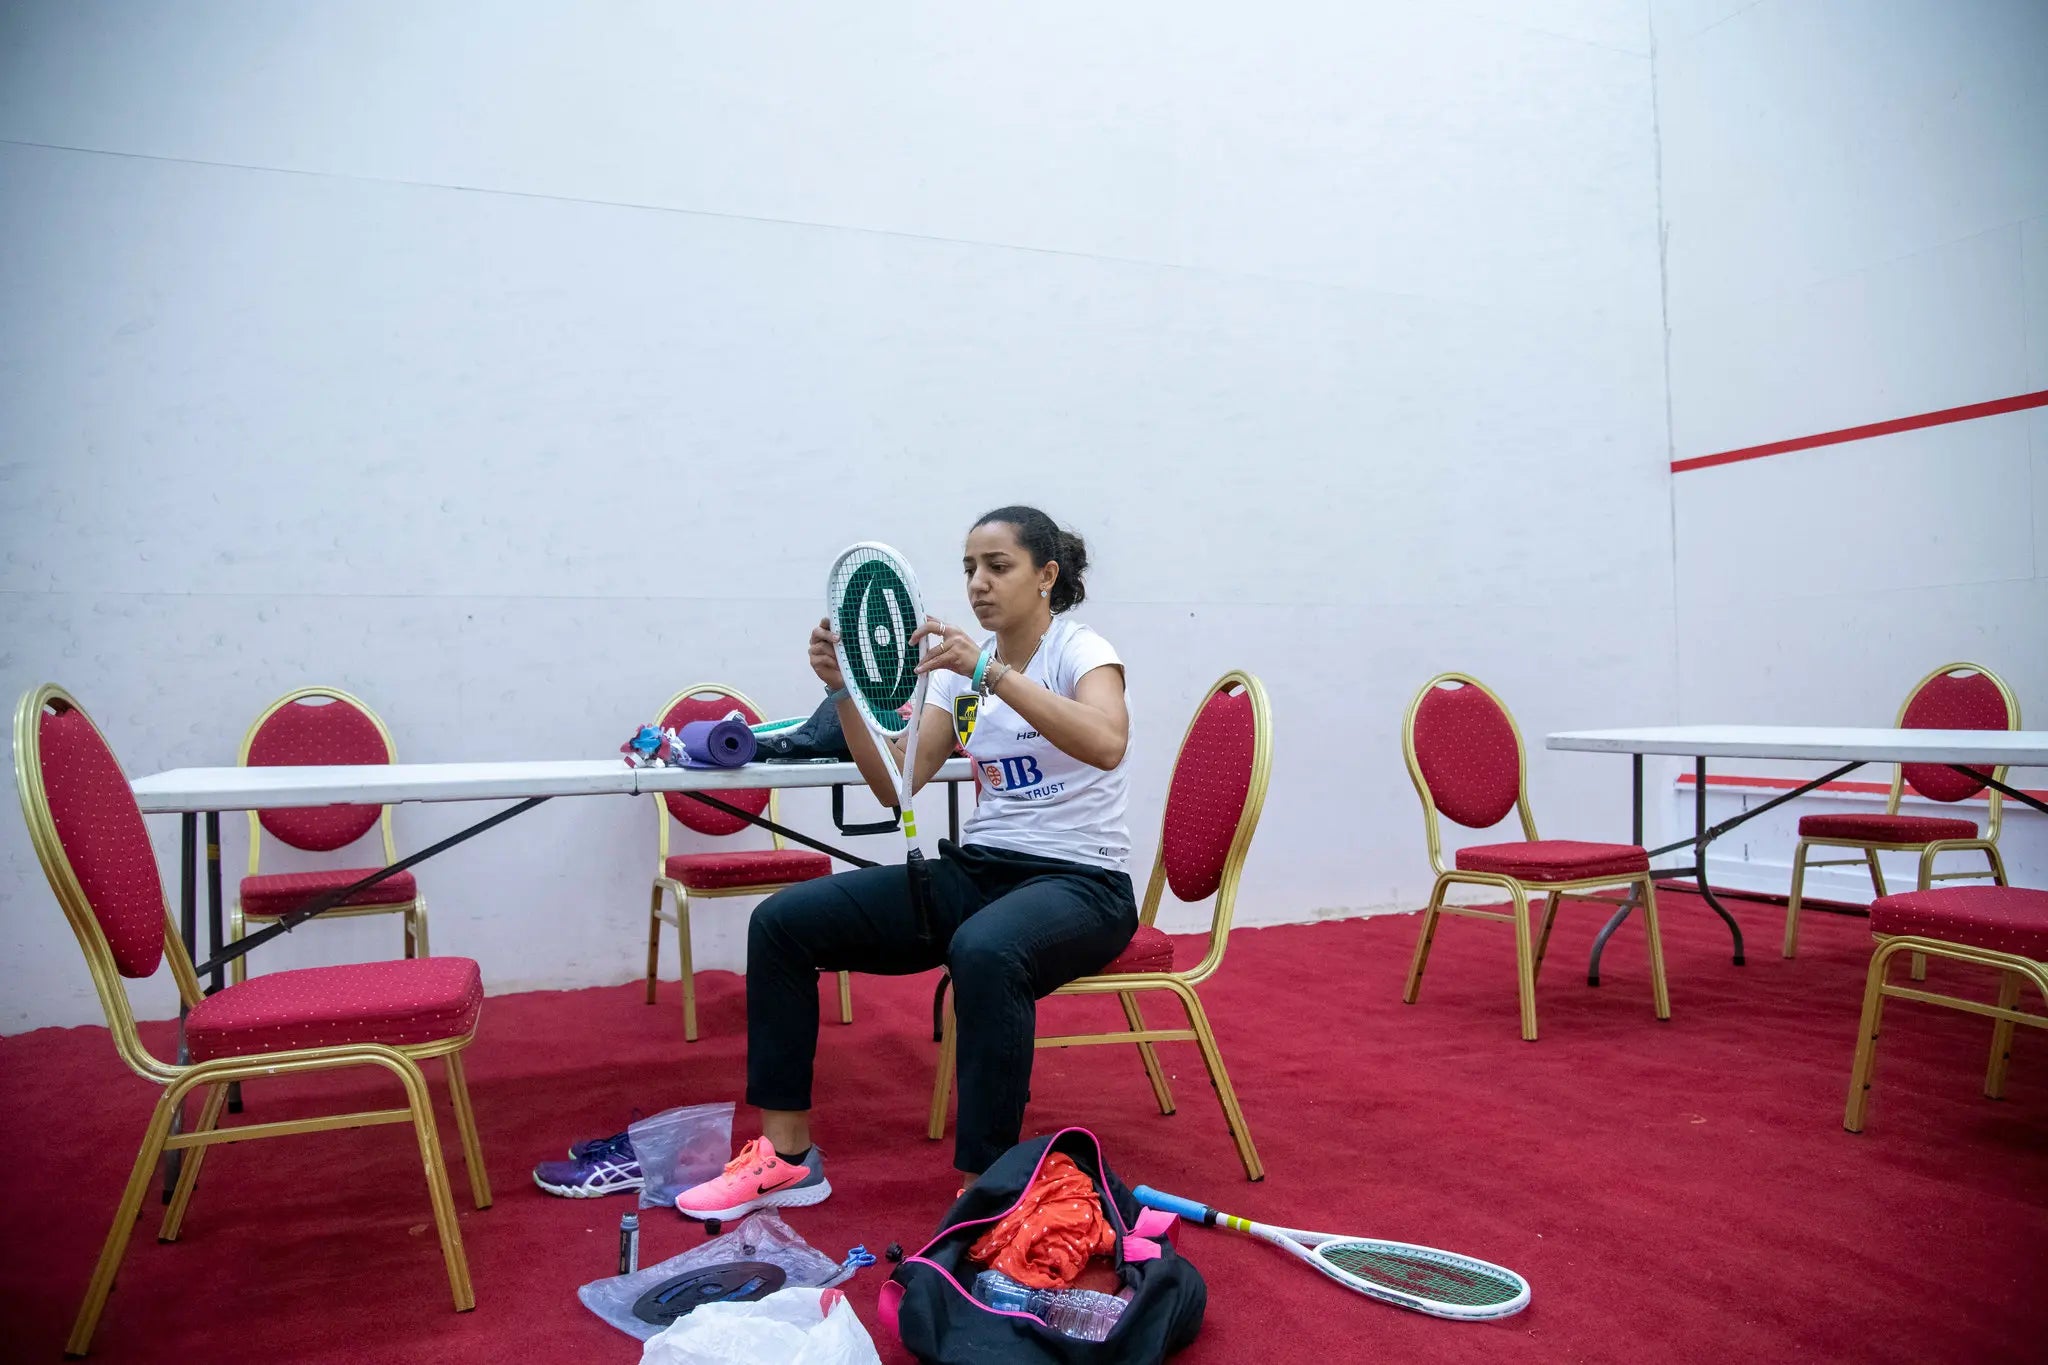 Egyptians dominate the Squash World Championships